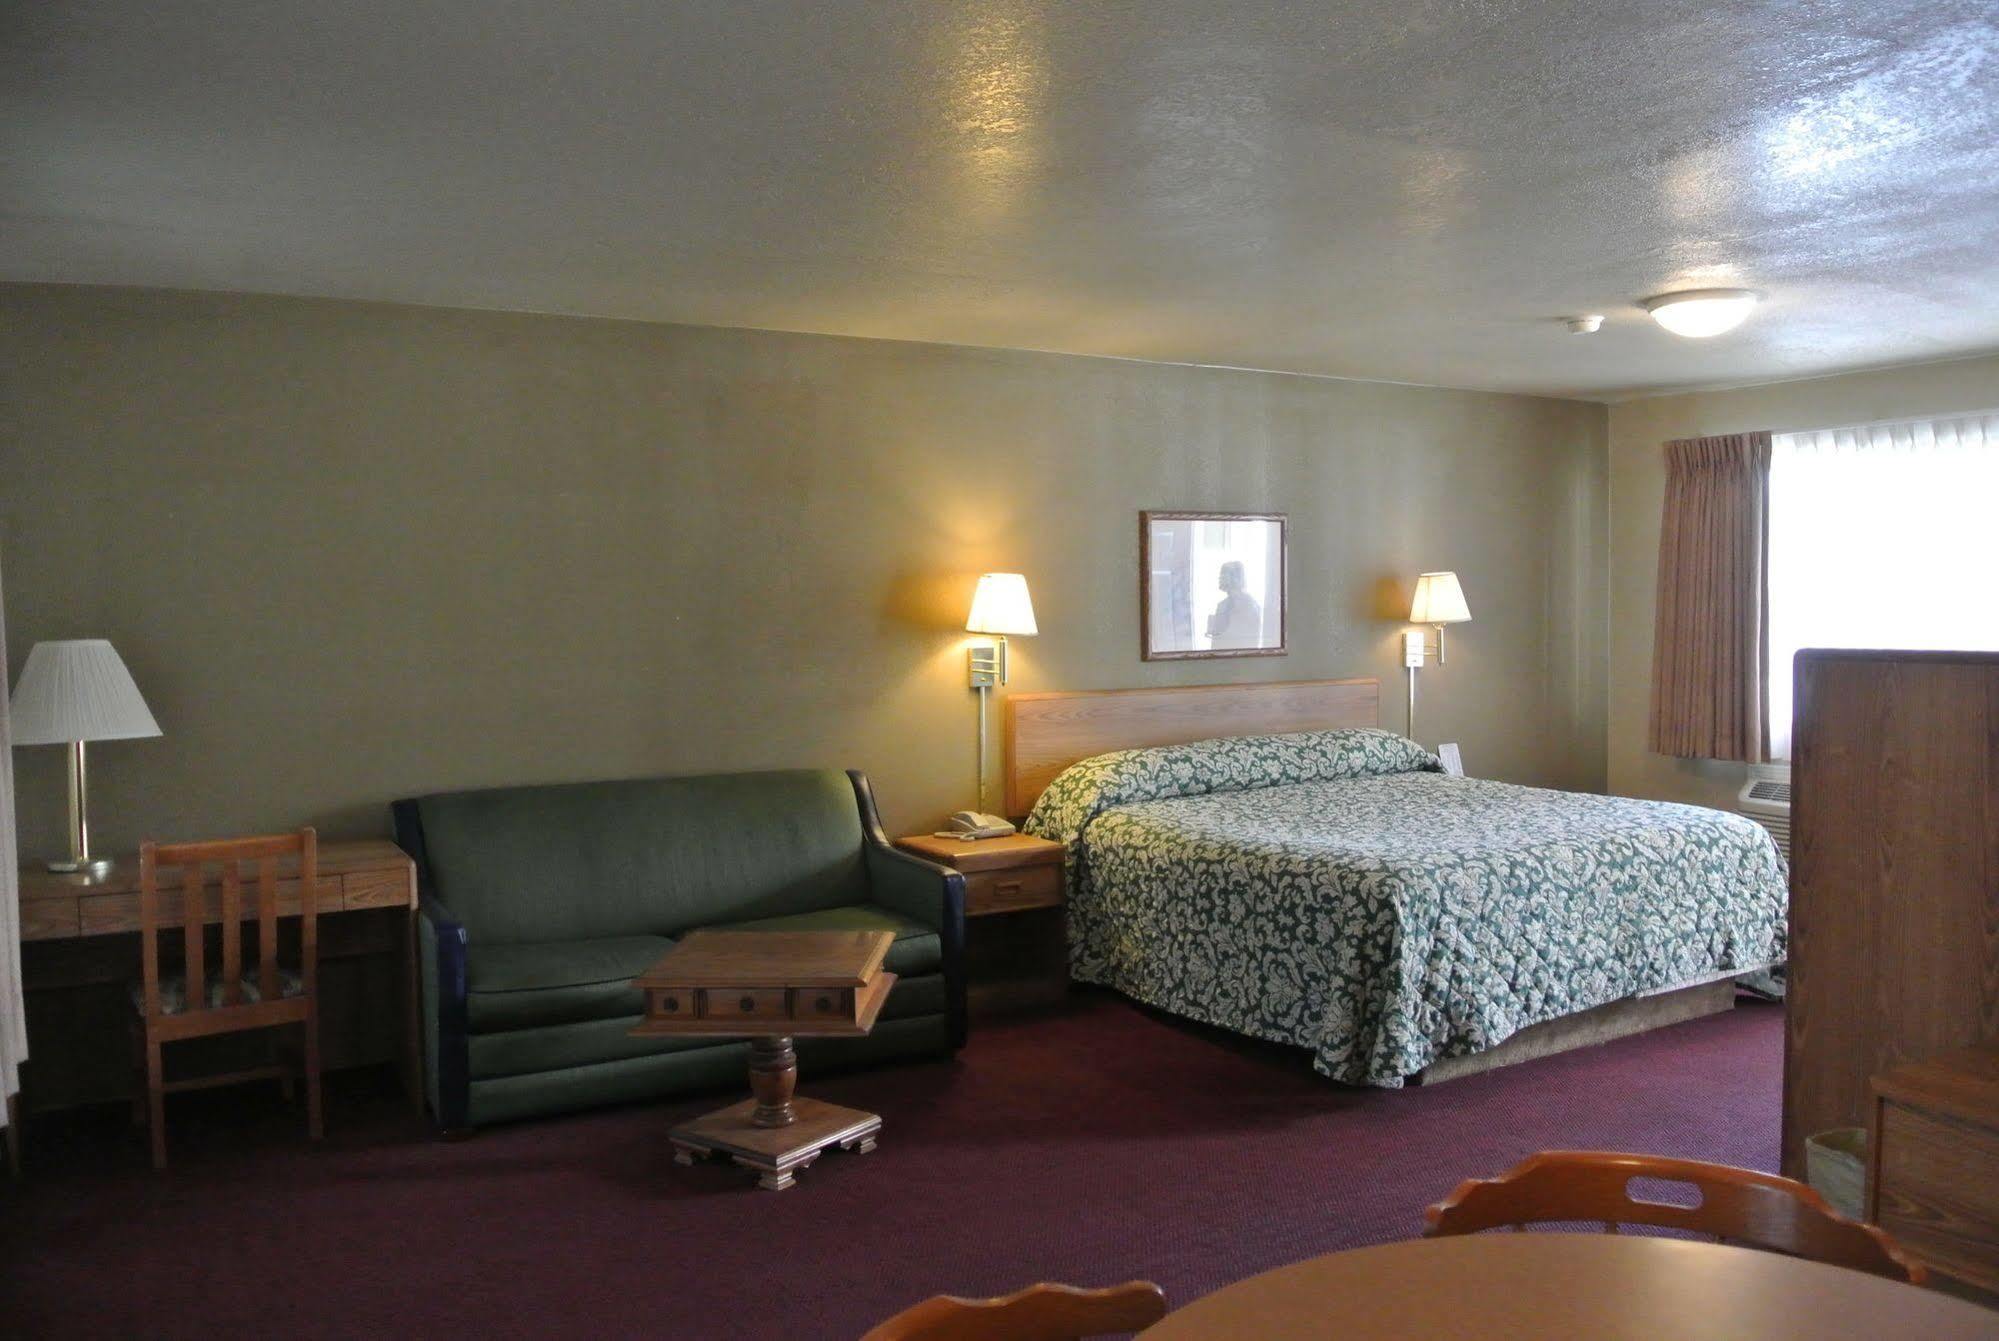 Vino Inn & Suites Atascadero Exterior foto